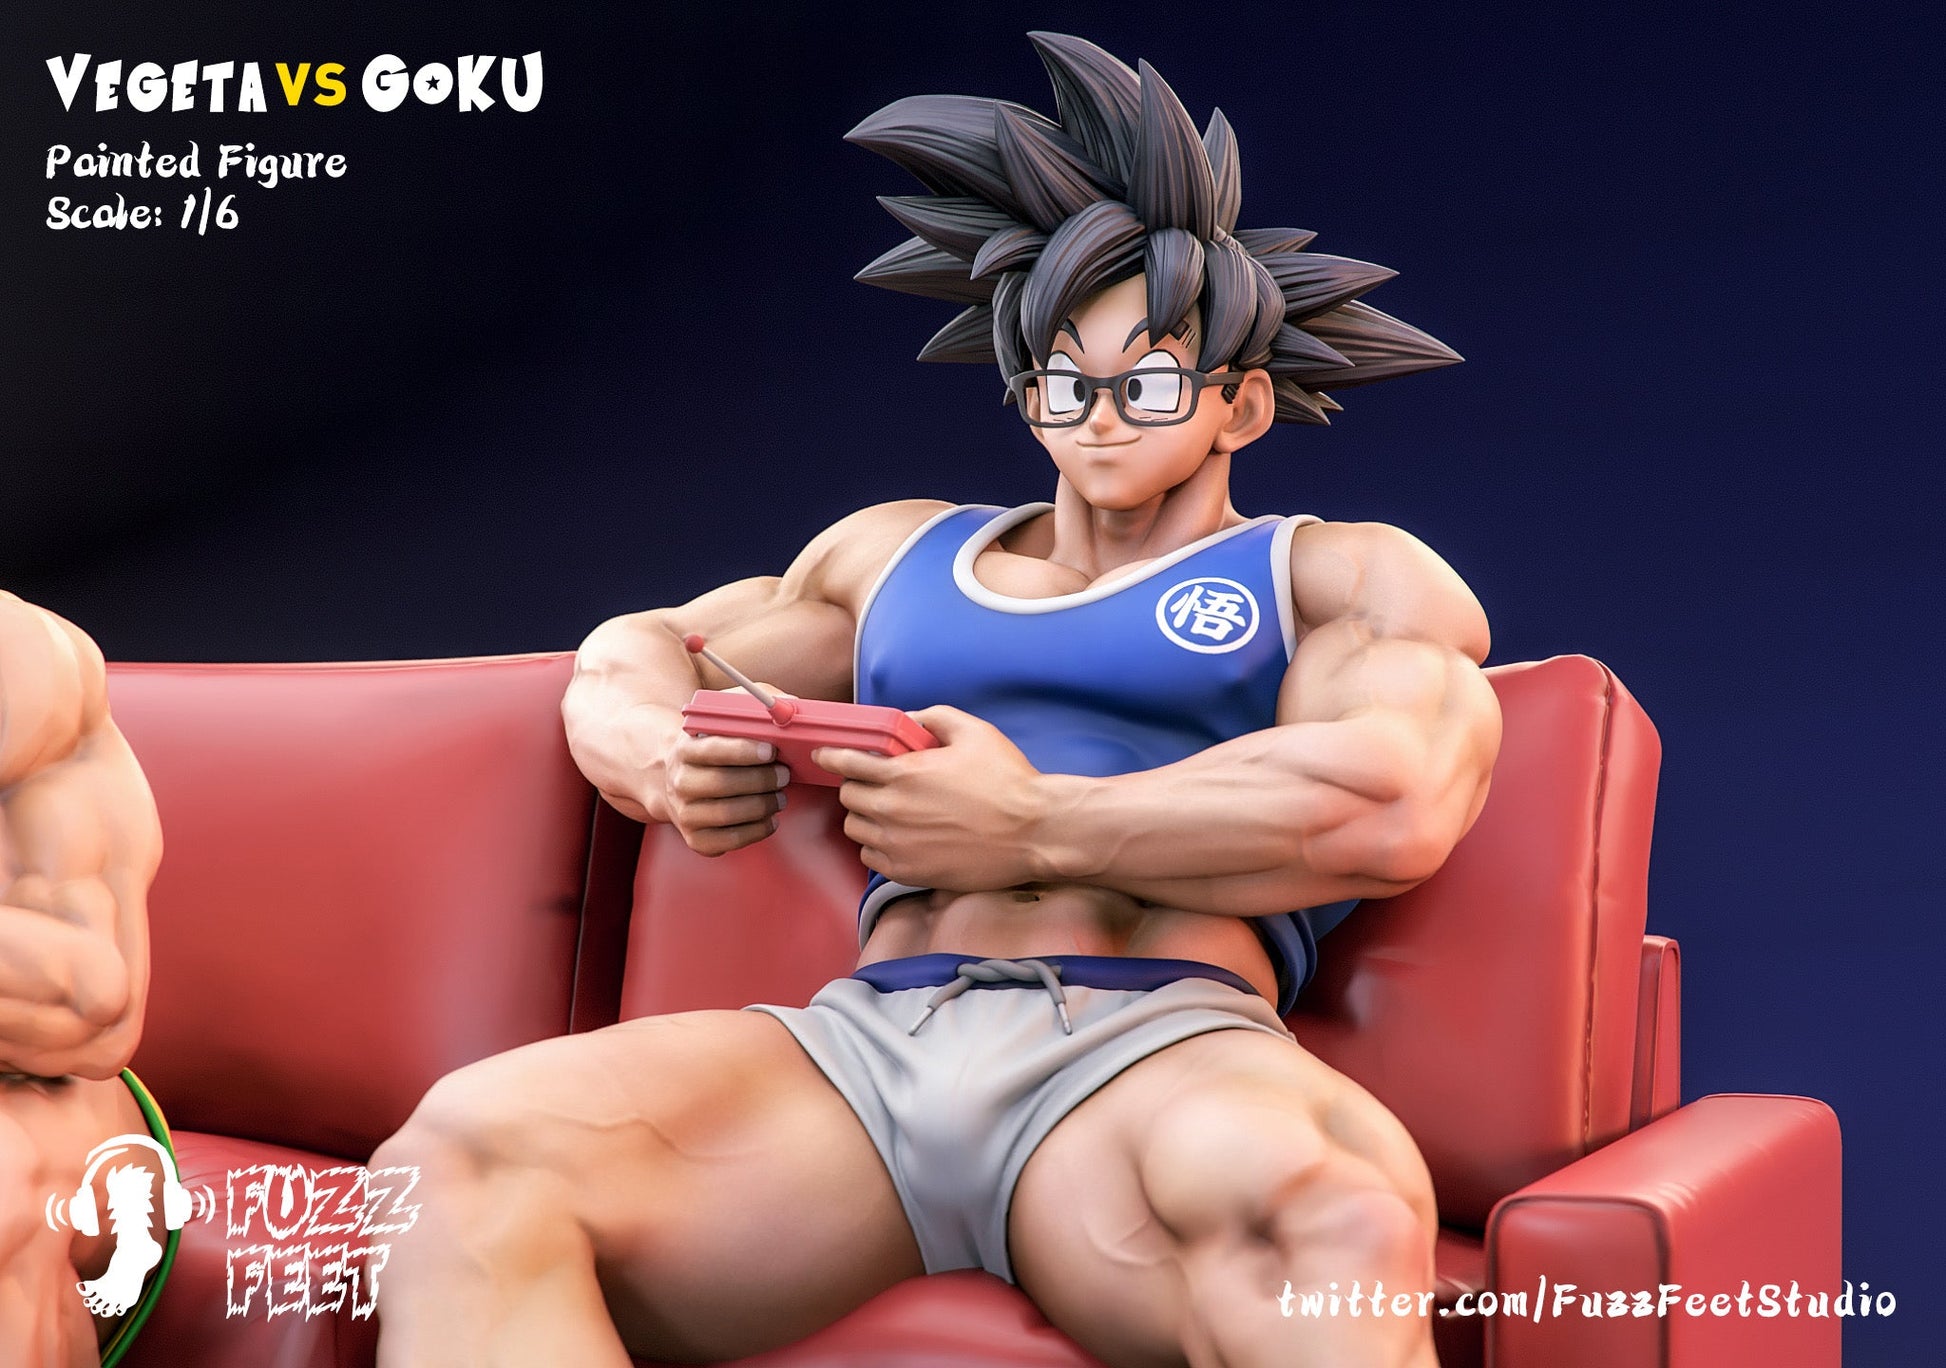 Fuzzfeet - Goku and Vegeta StatueCorp